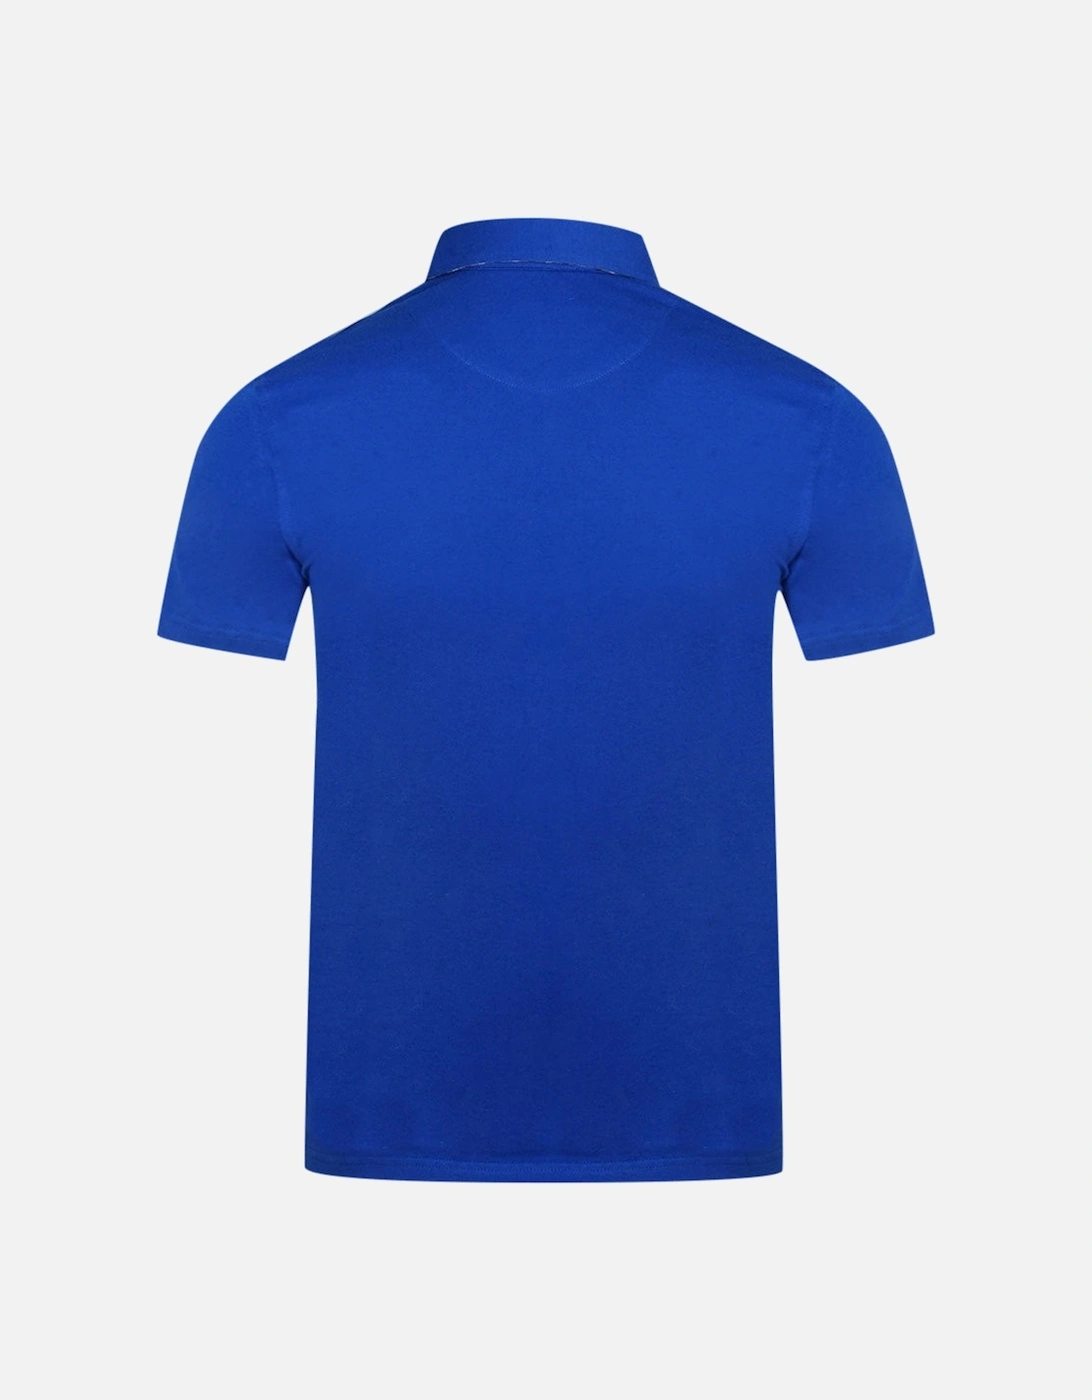 Aldis Crest Chest Logo Blue Polo Shirt